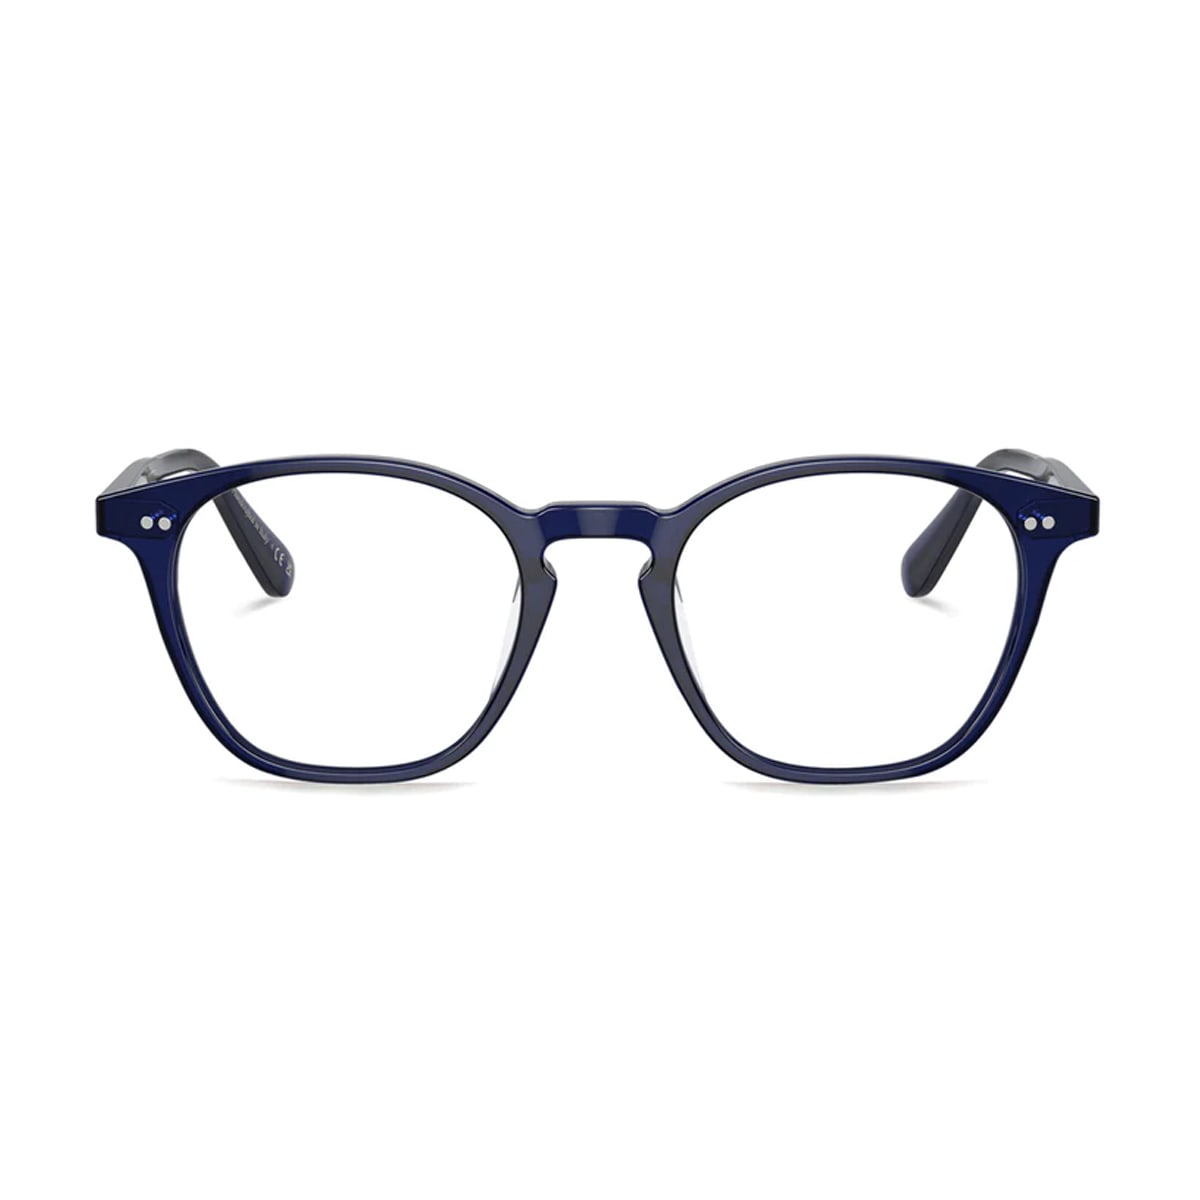 Ov5533u - Ronne 1566 Glasses